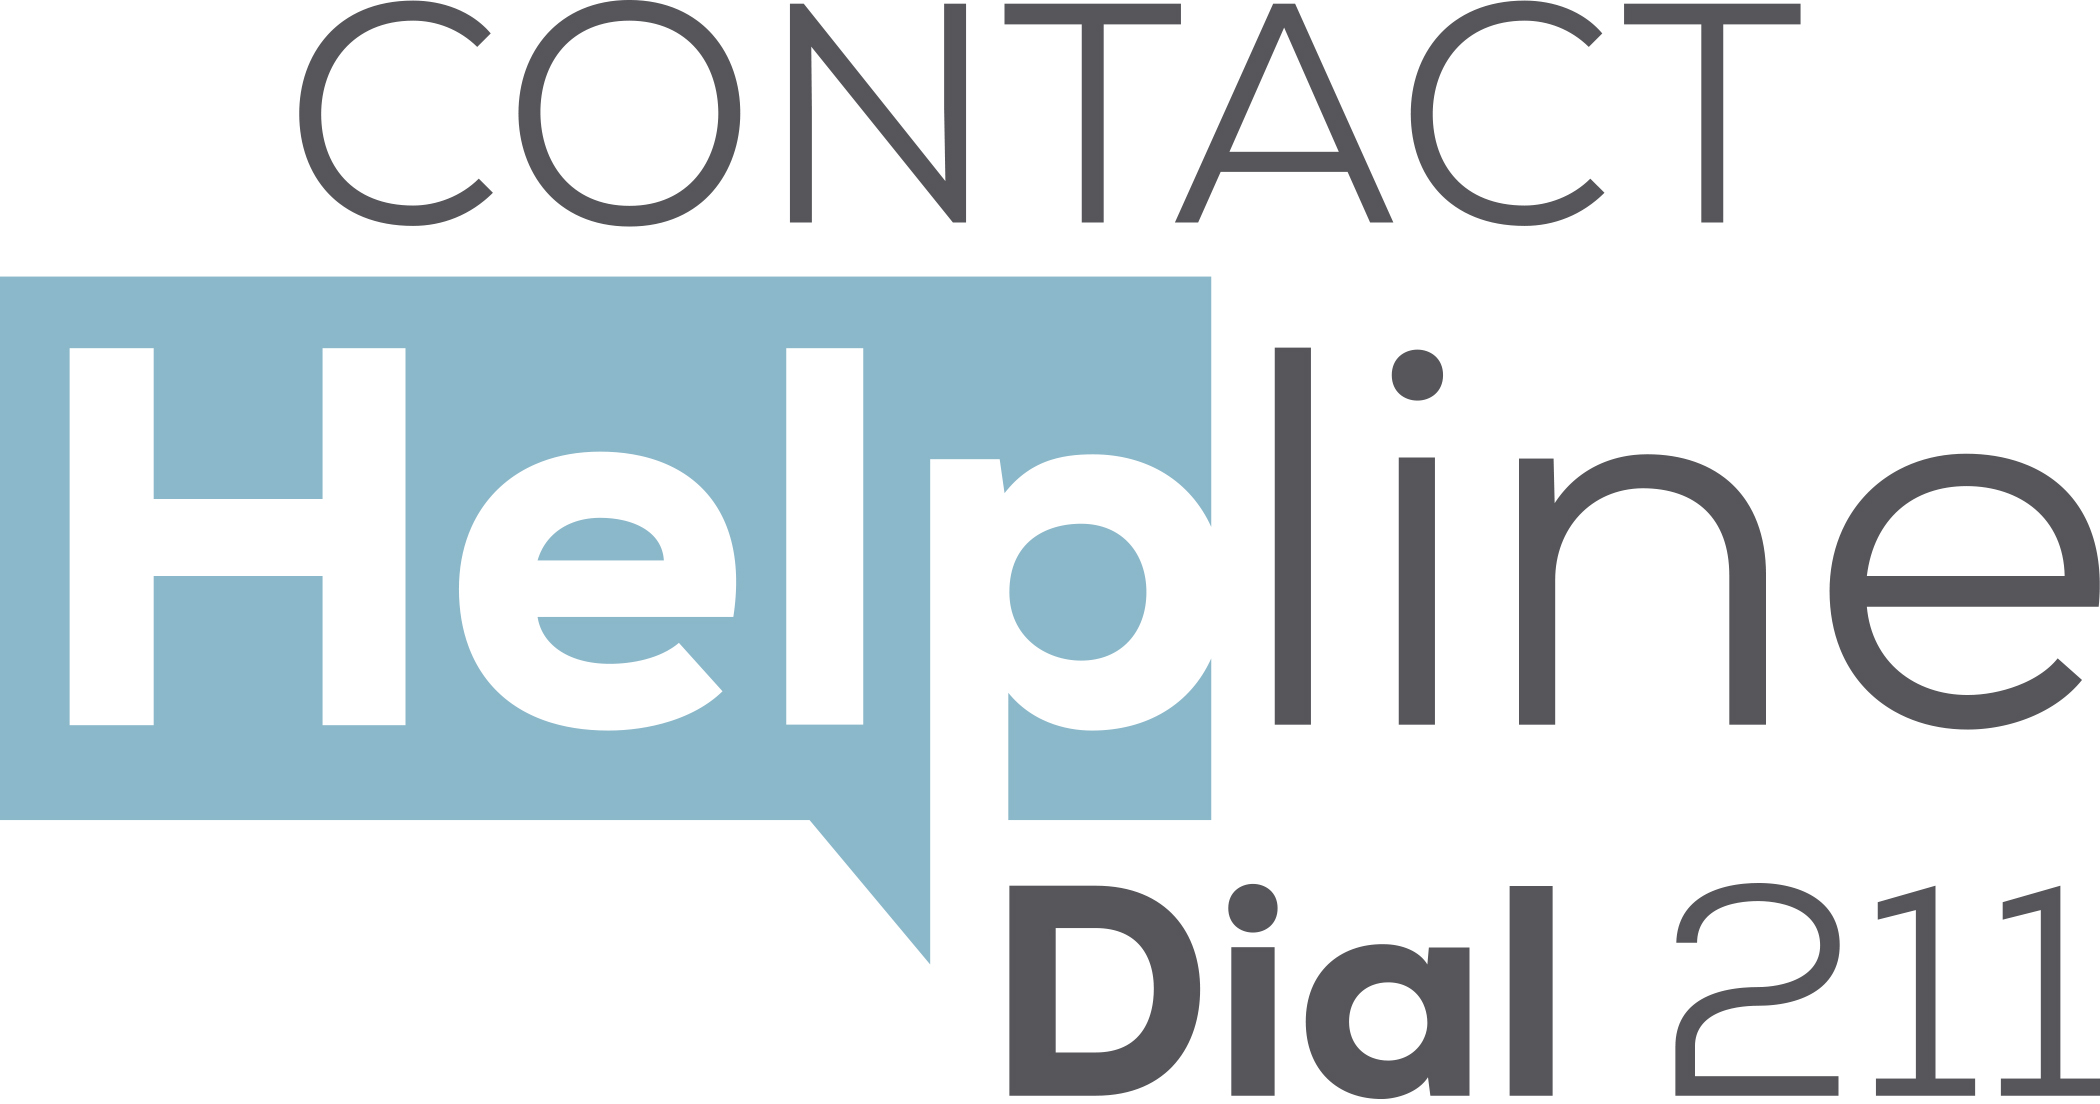 Nonprofit Organization: CONTACT Helpline